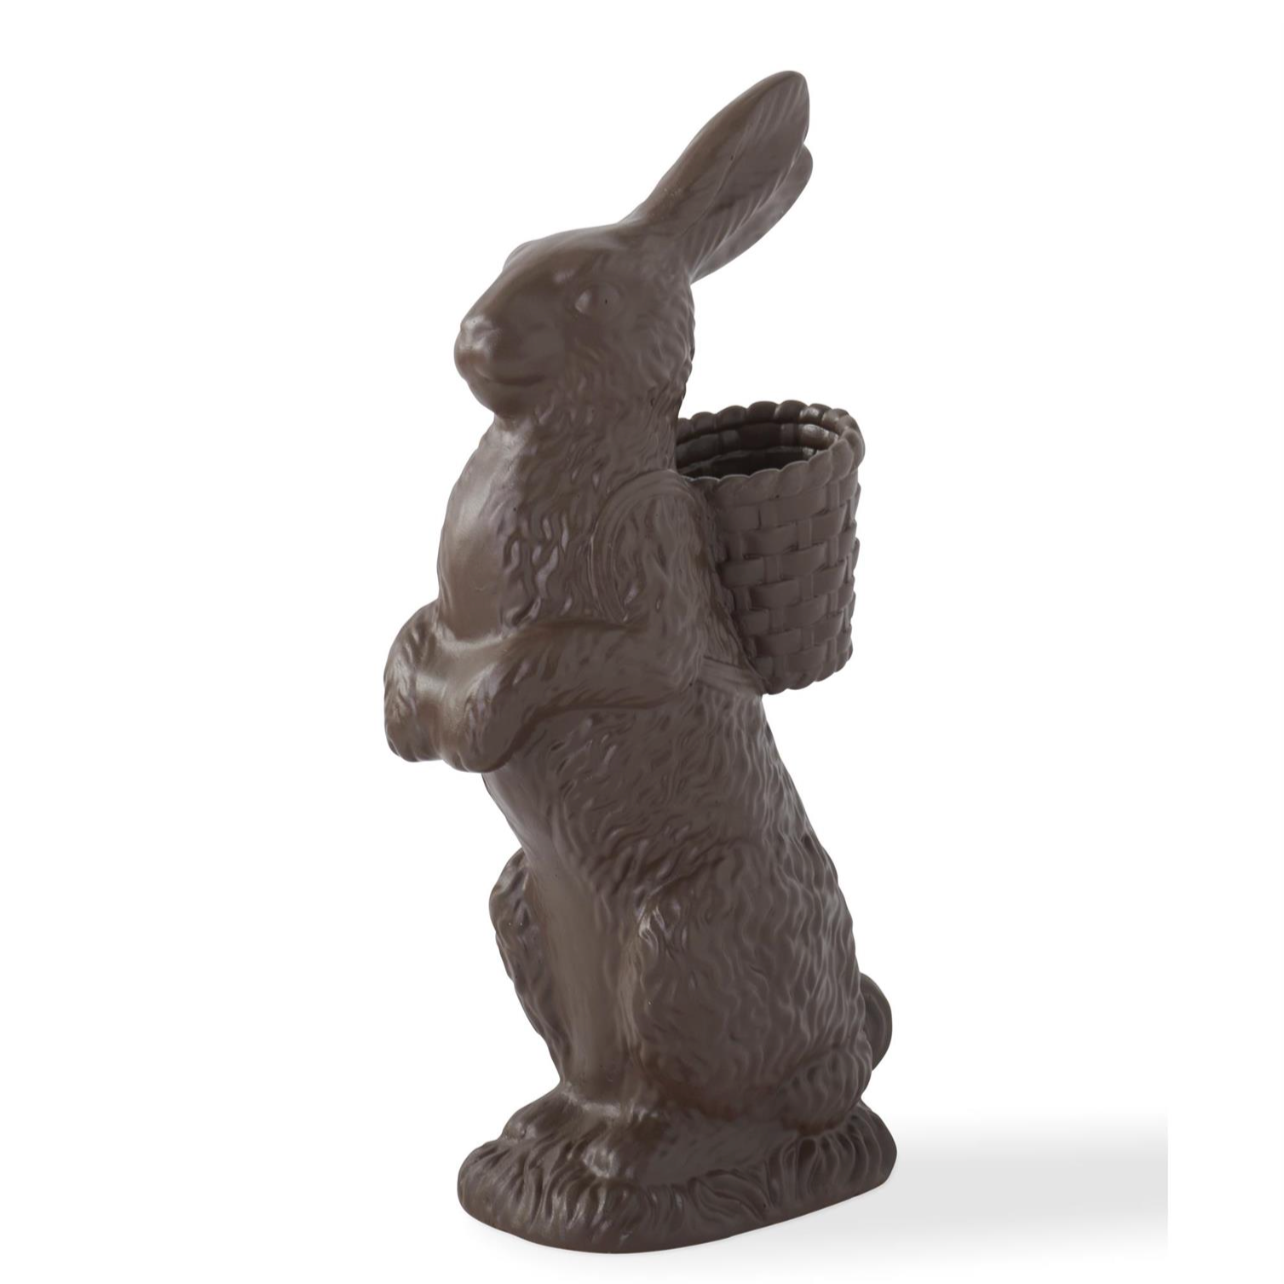 Resin Chocolate Bunny - Danshire Market and Design 